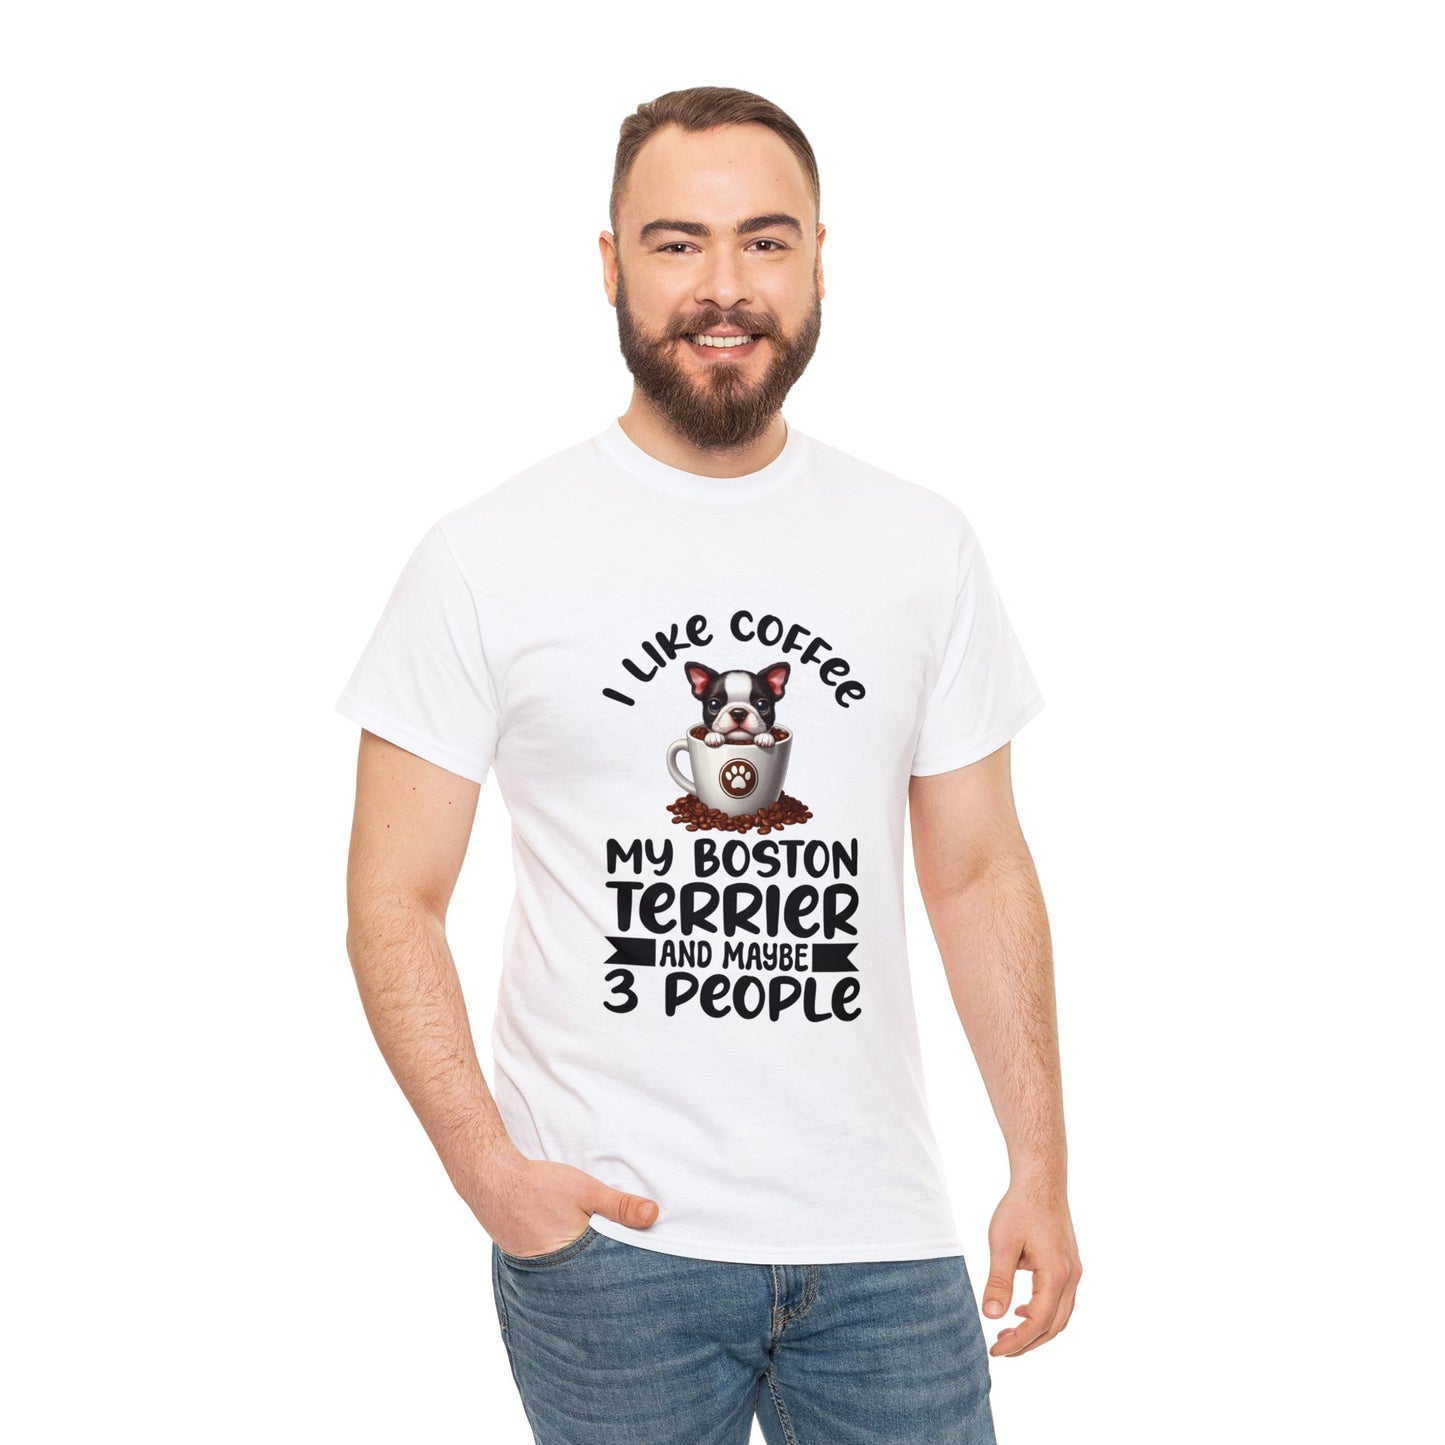 Maddie - Unisex Tshirts for Boston Terrier Lovers